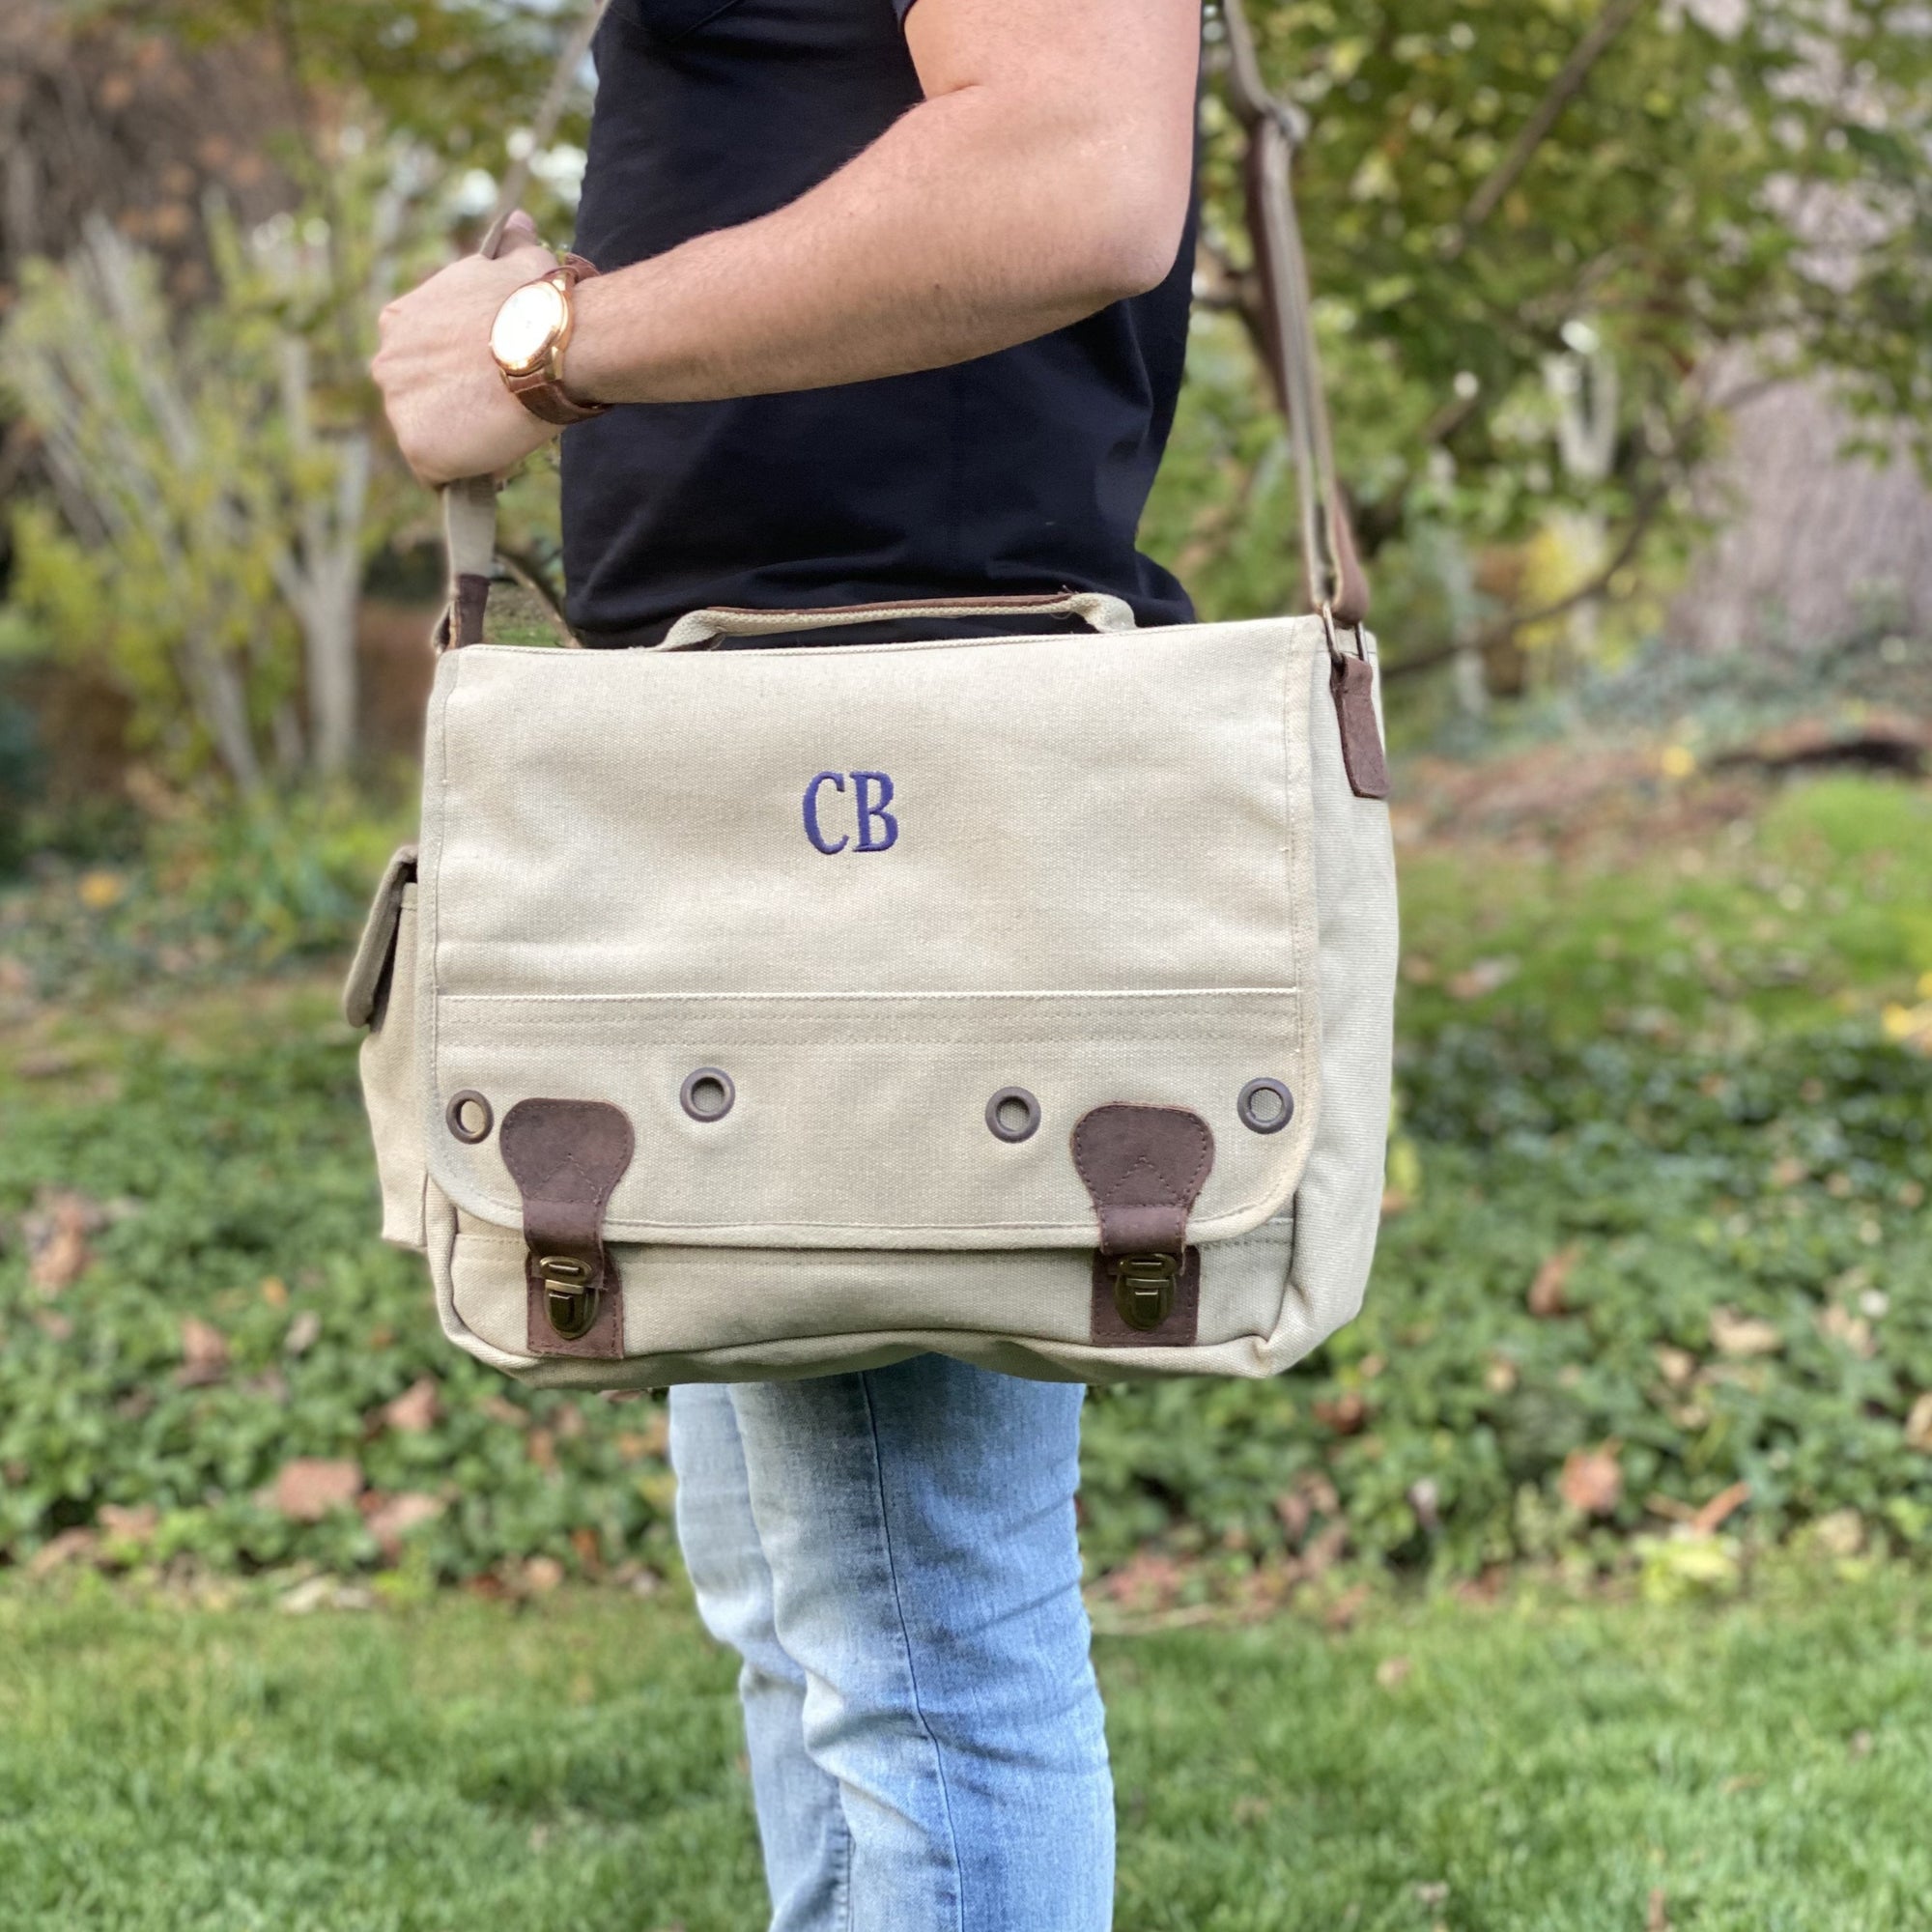 Leather Briefcase Laptop bag 18 inch Handmade Messenger Bags Best Satchel  by KPL